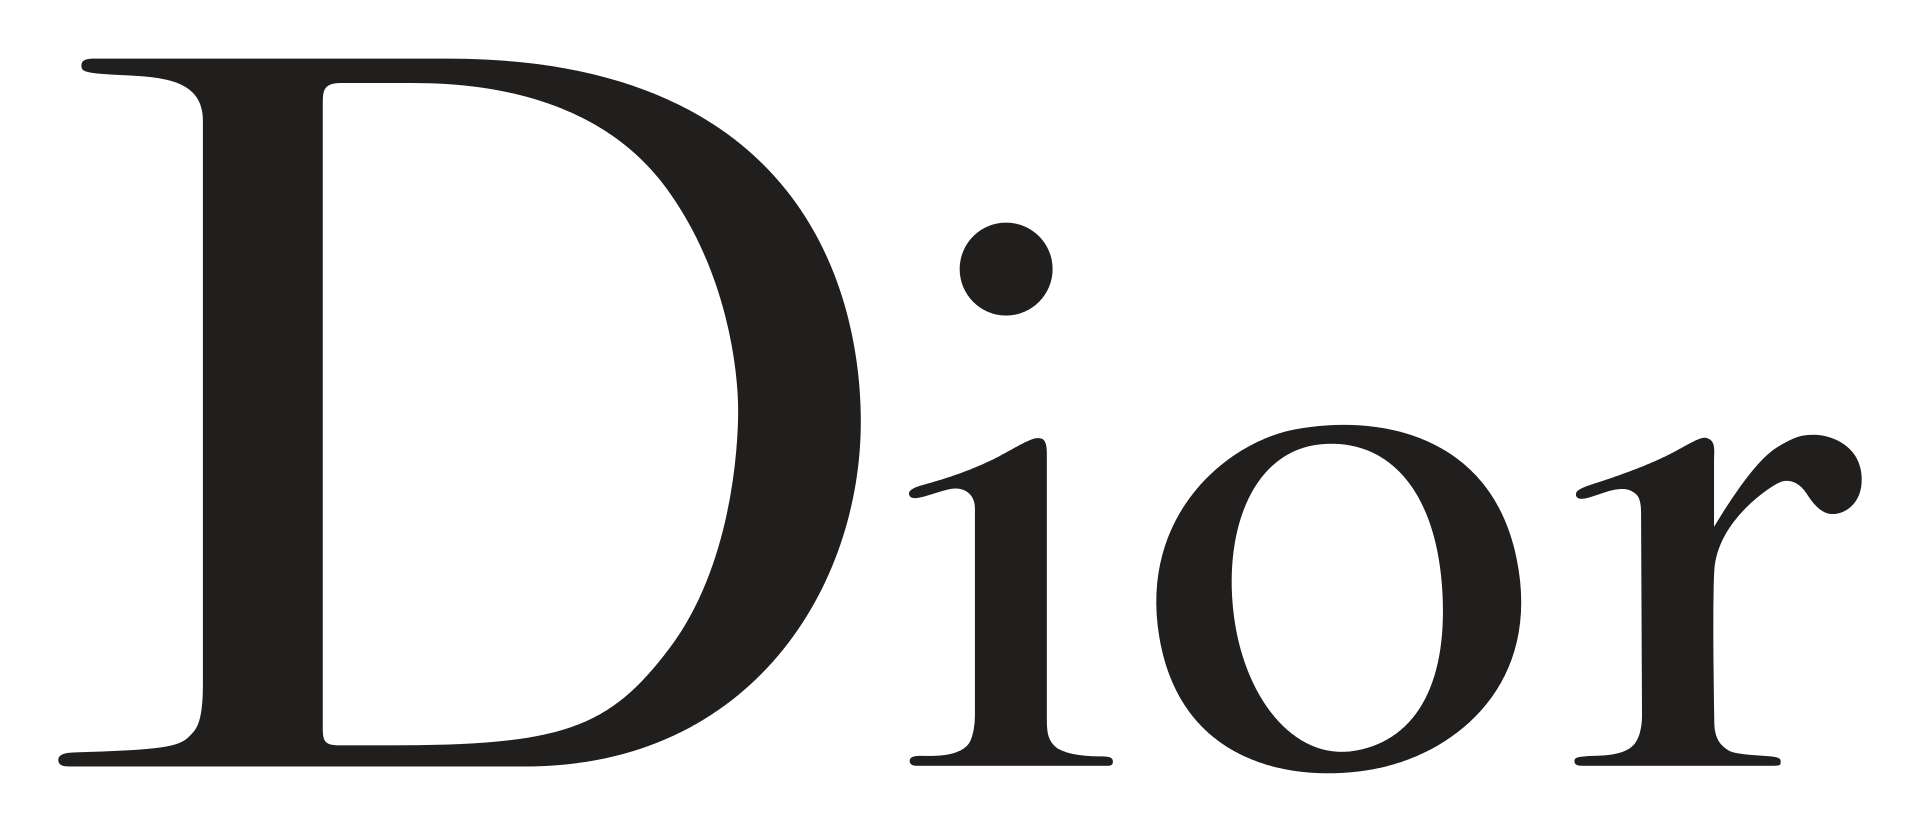 کریستین دیور - Christian Dior